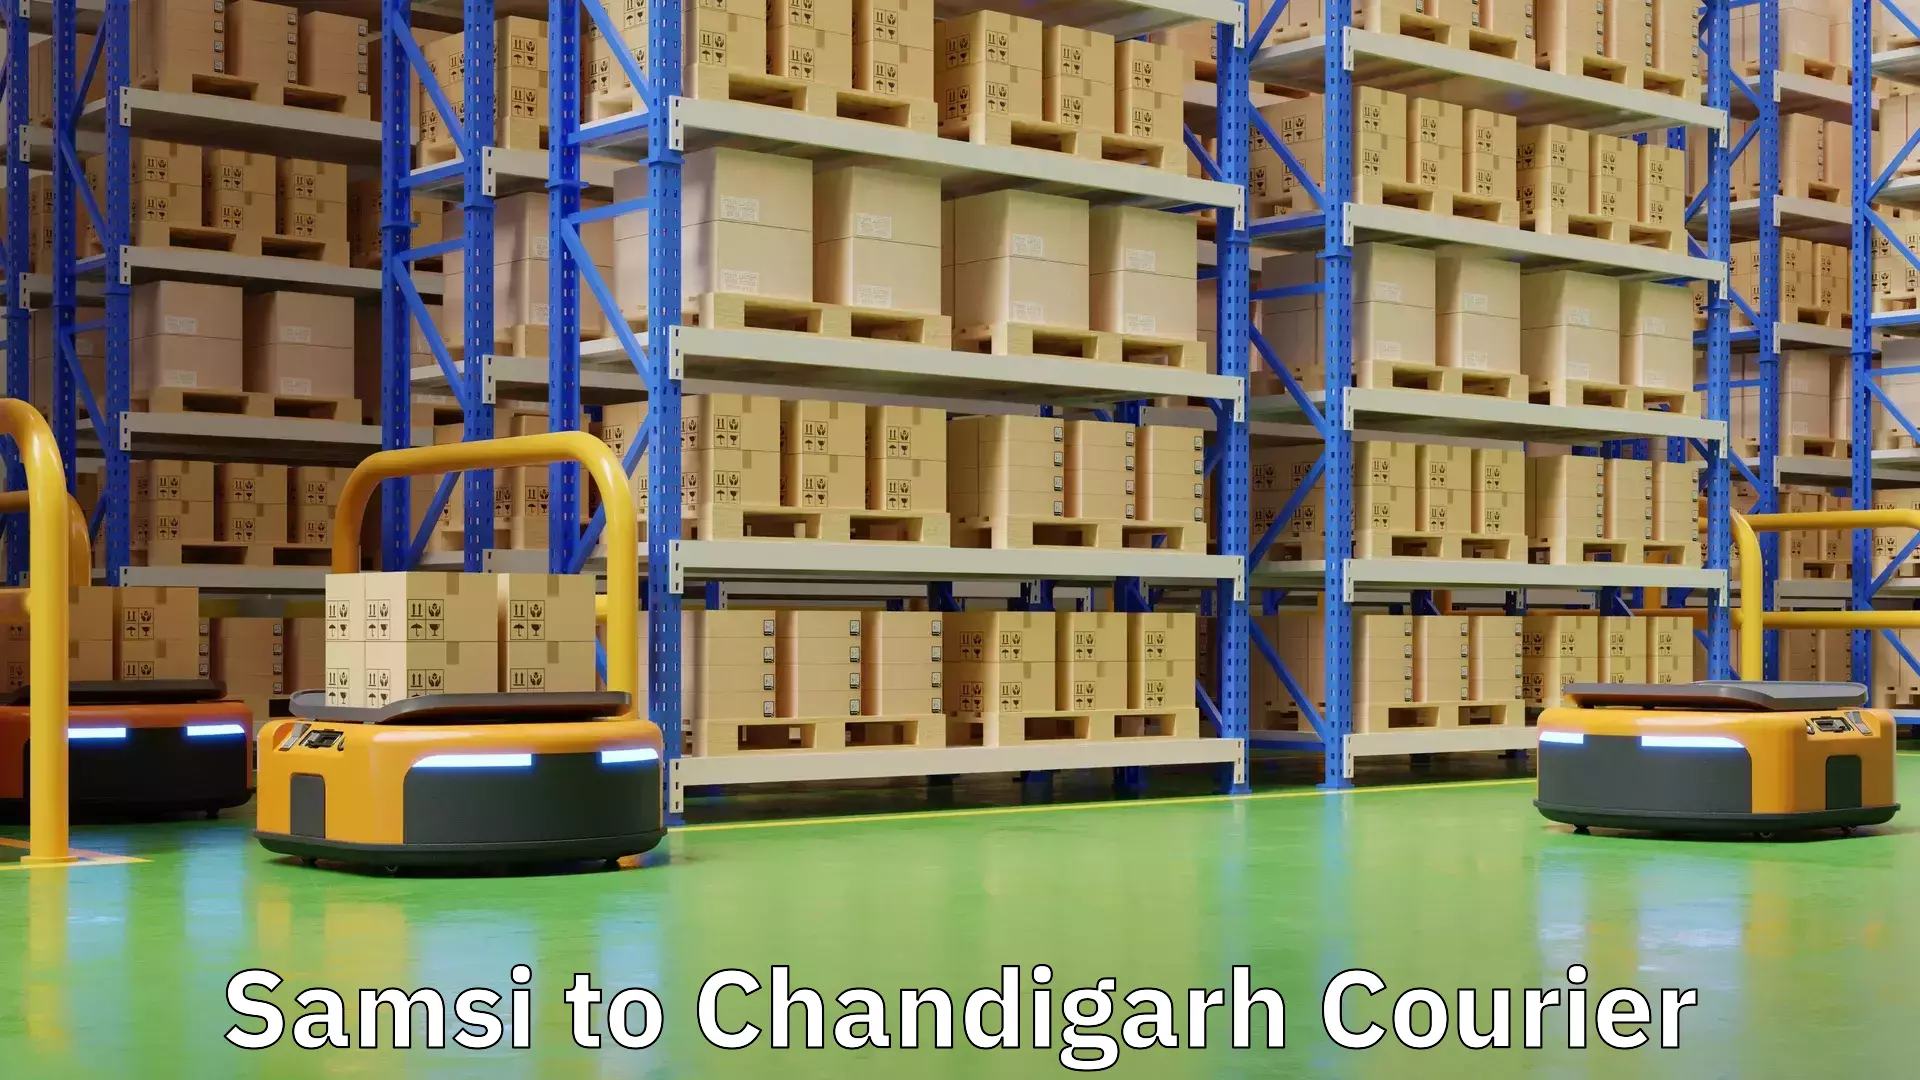 Global logistics network Samsi to Chandigarh